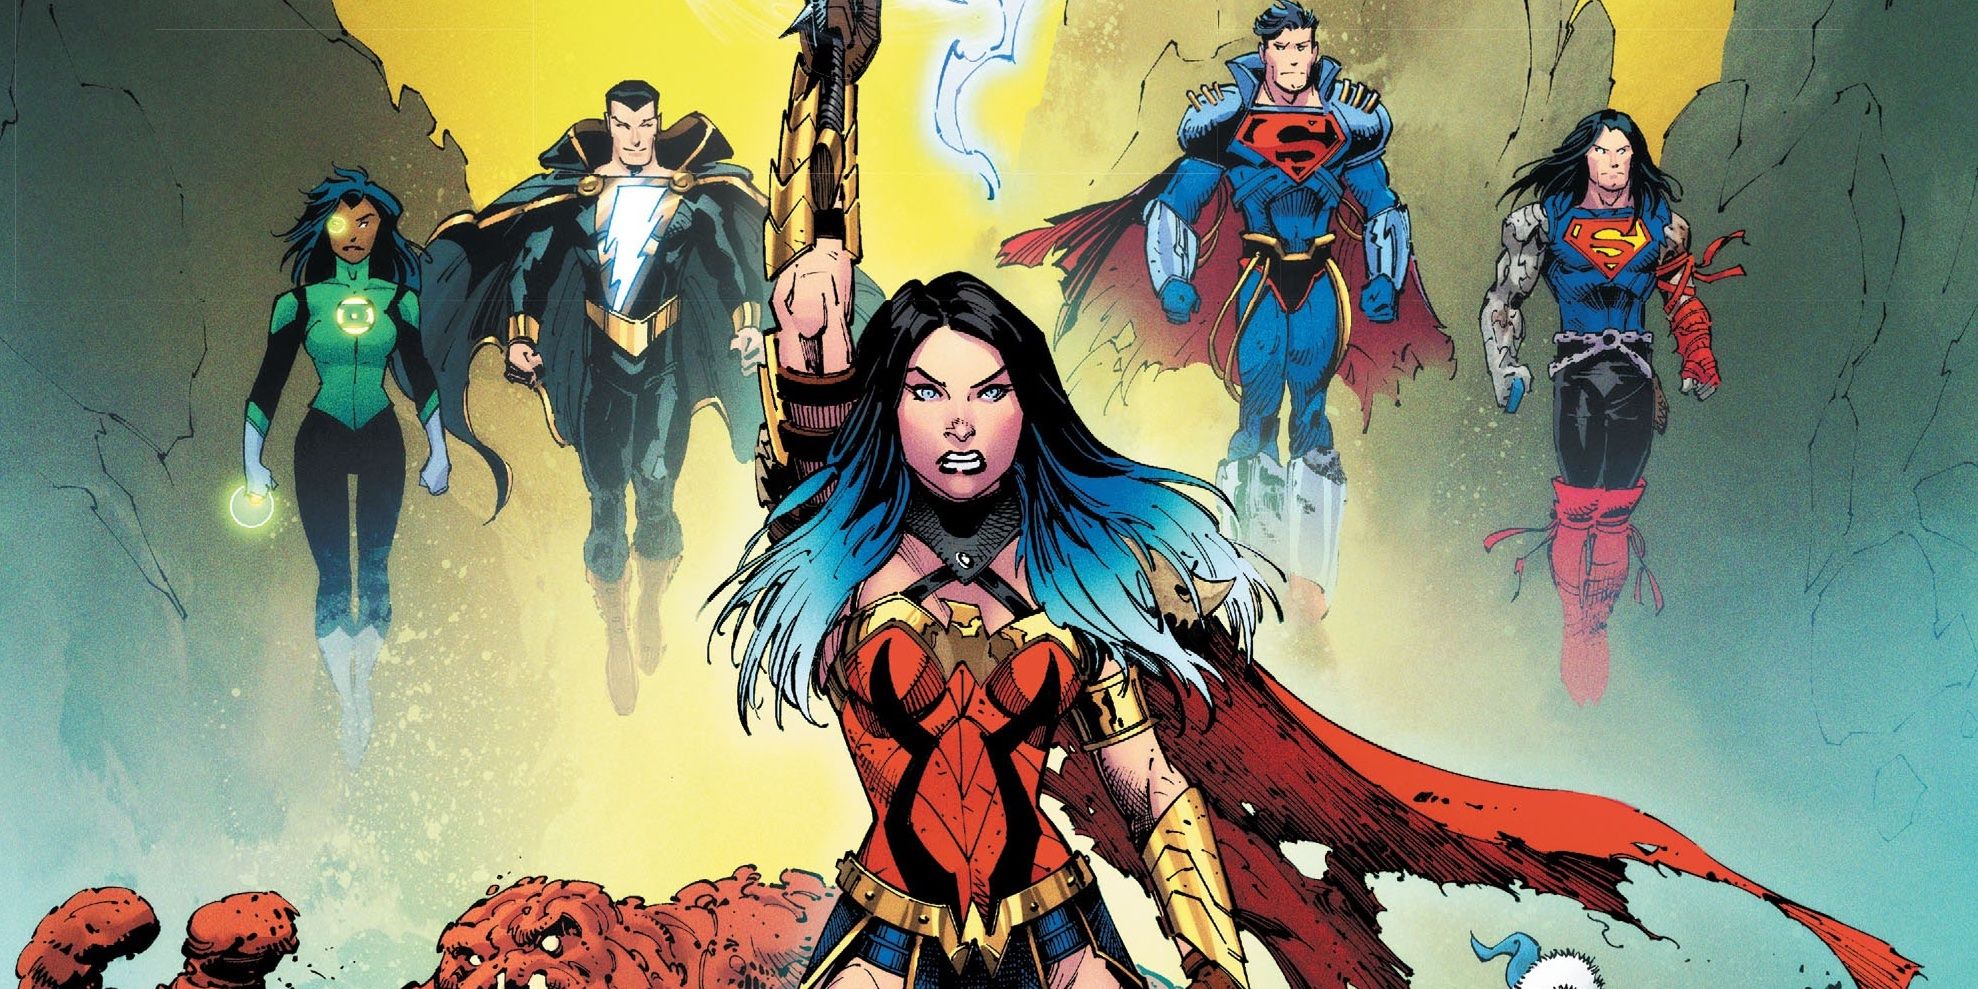 Wonder Woman to star in DC Comics' Dark Nights Metal sequel, Death